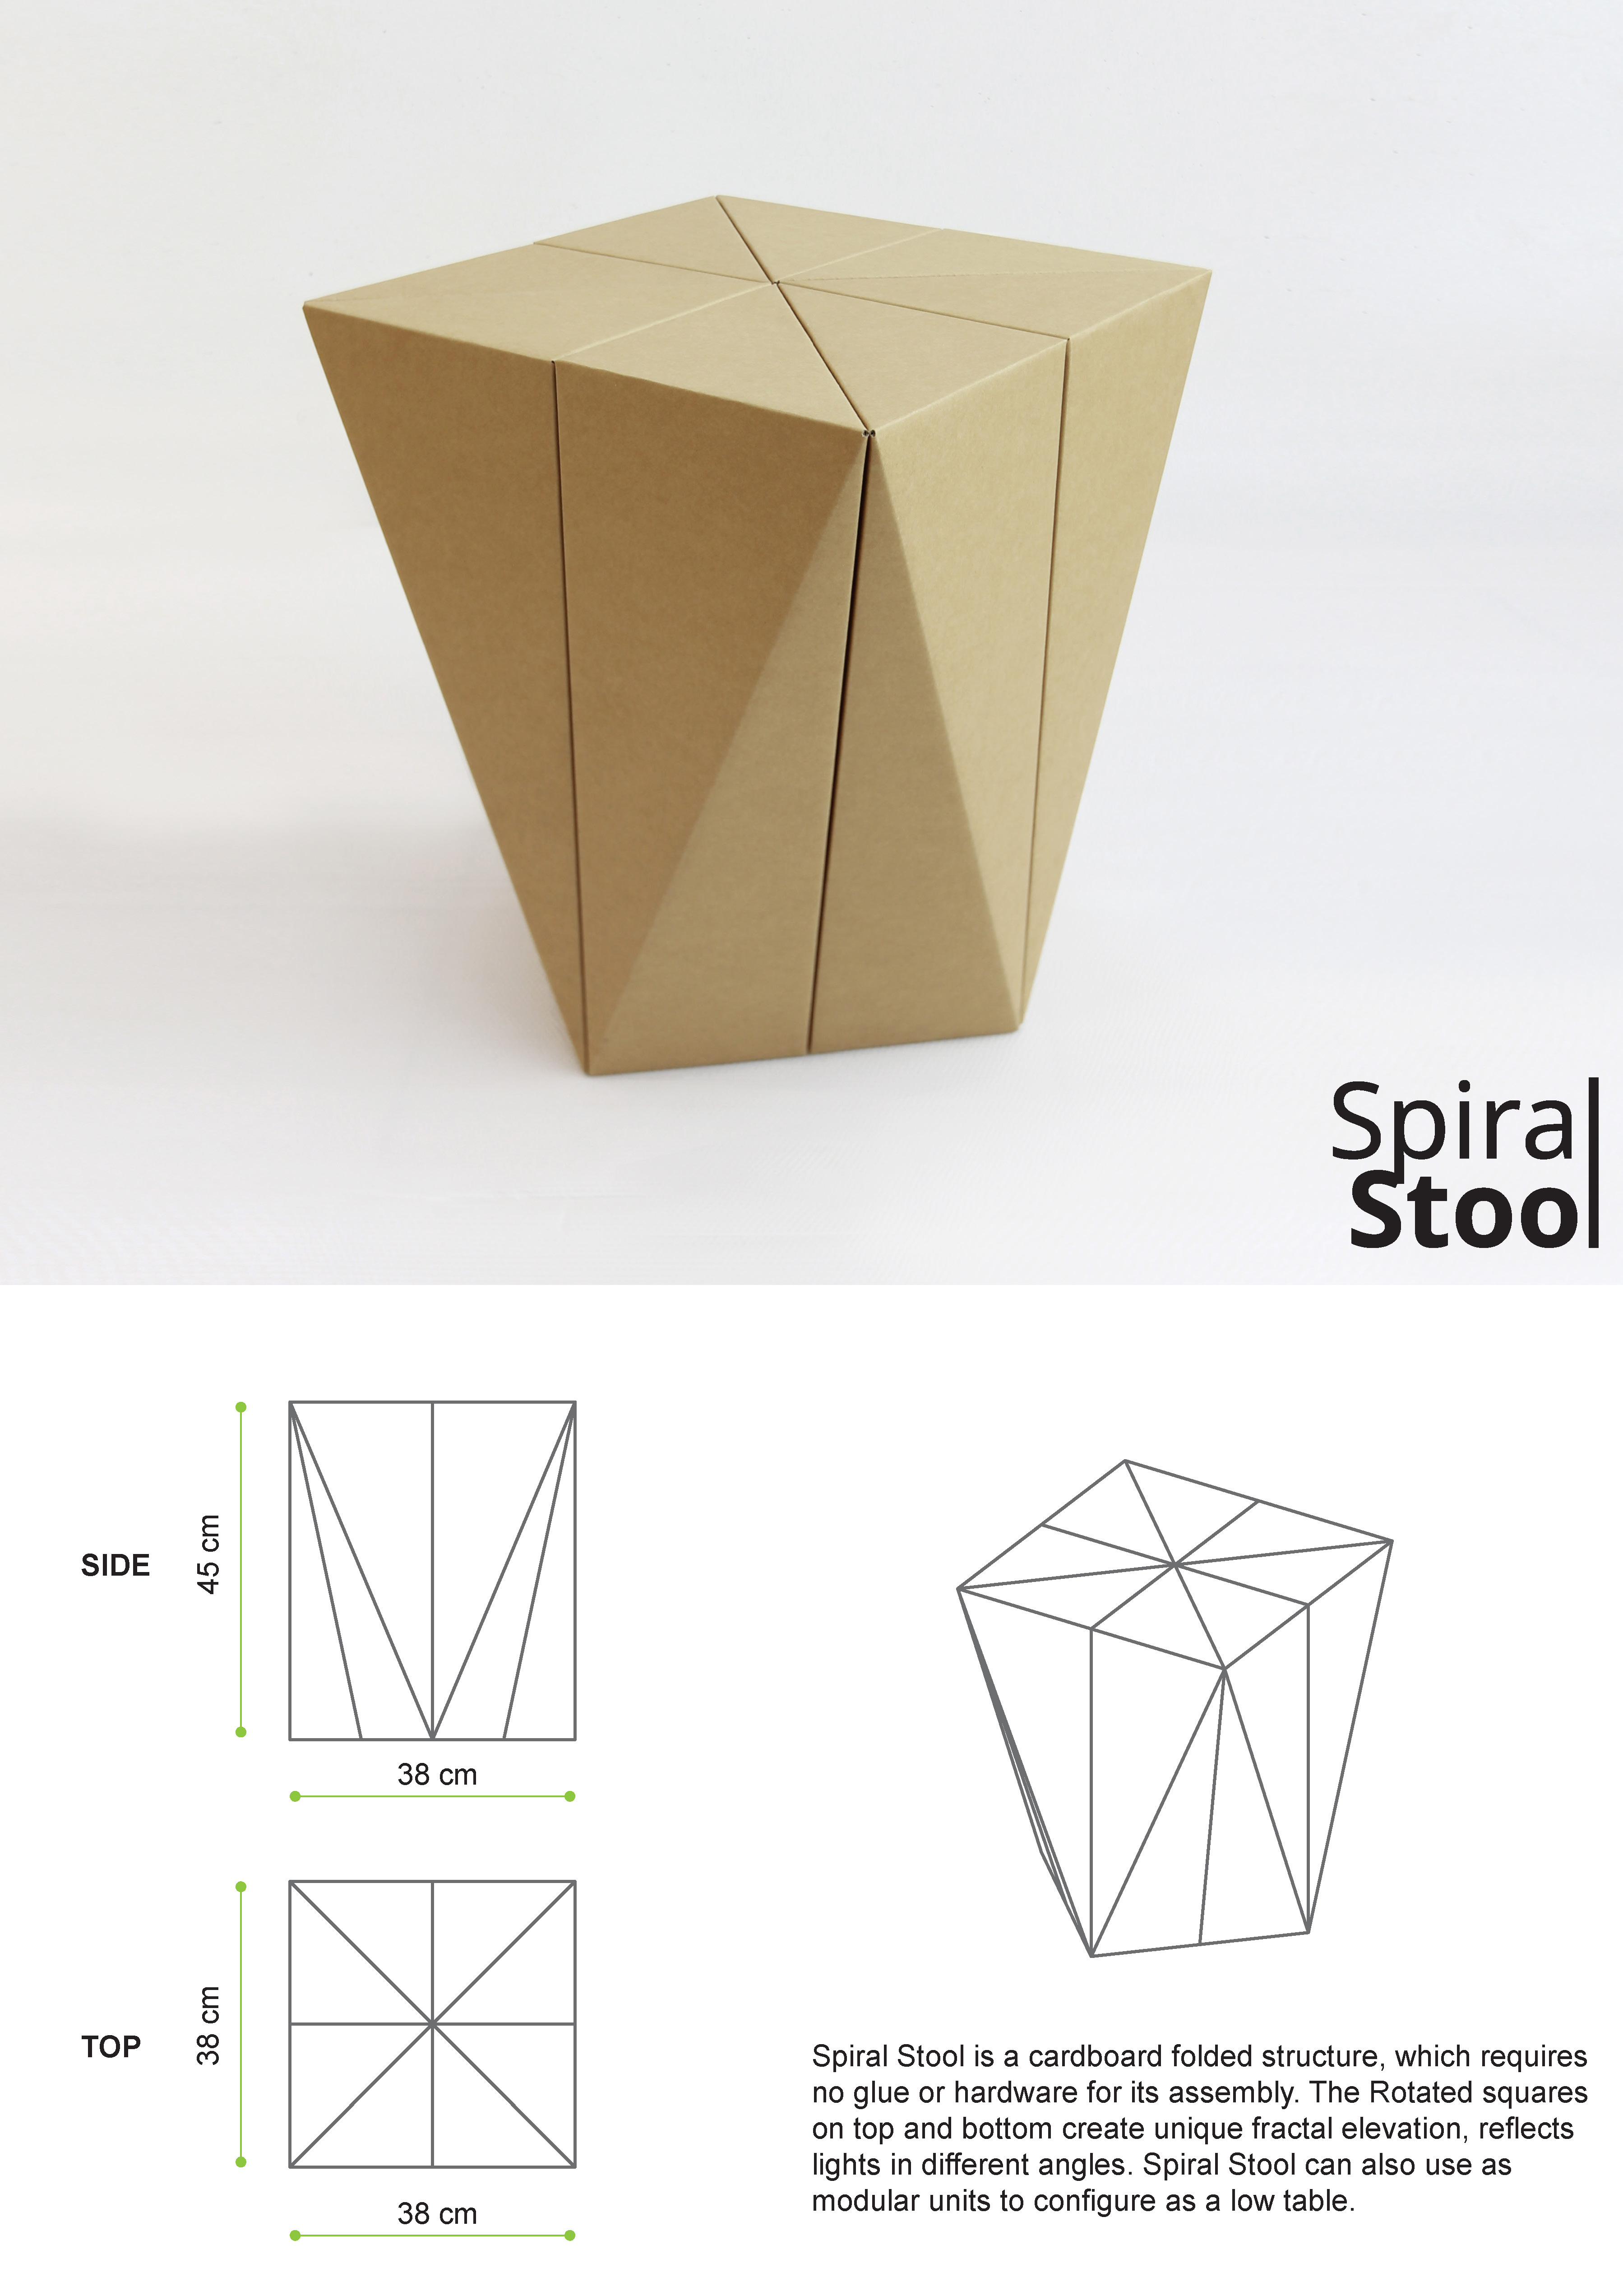 MUSE Design Winners - Spiral Stool